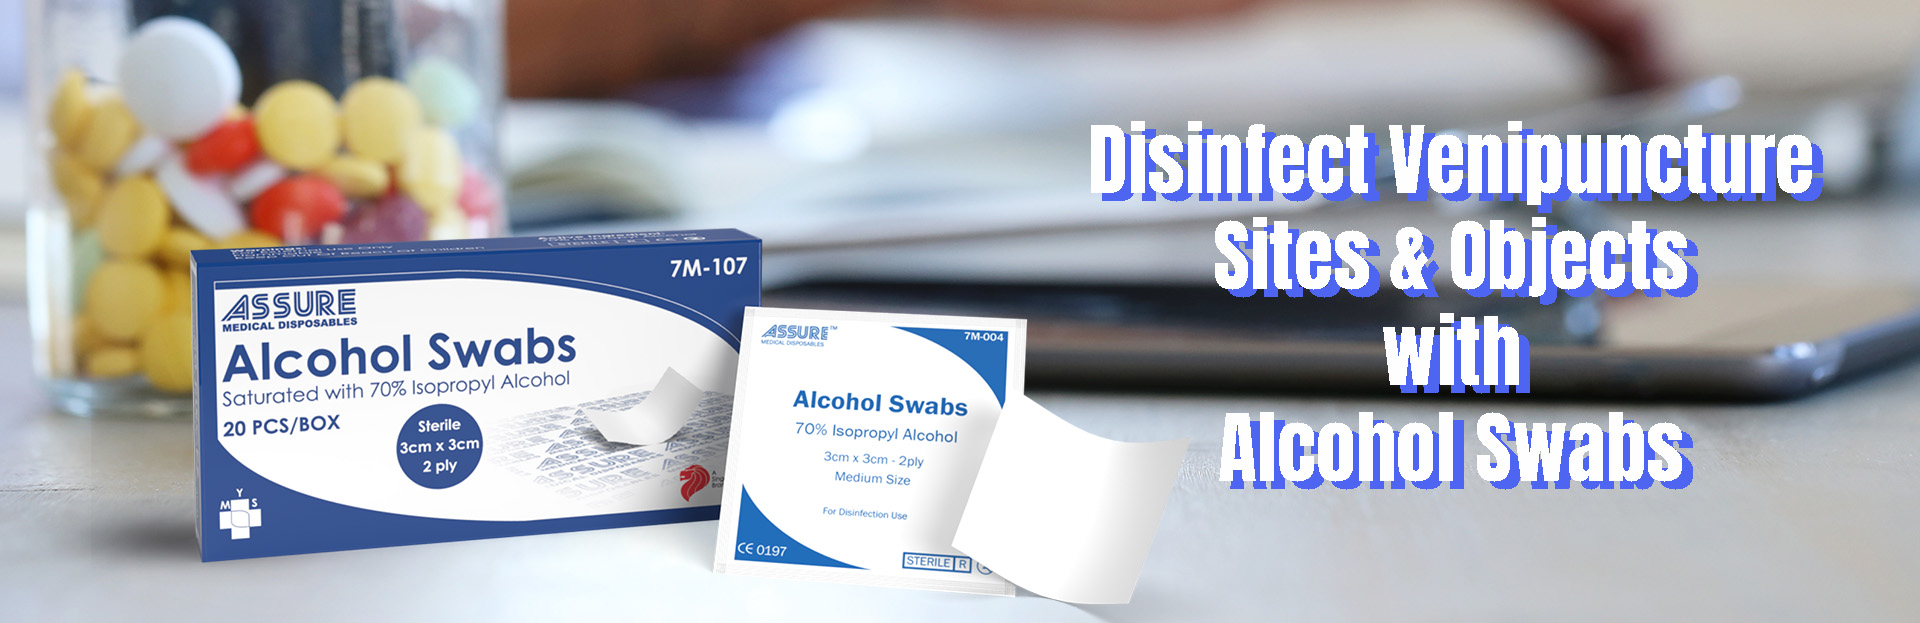 ASSURE-7M-107 alcohol swabs 20pcs/box